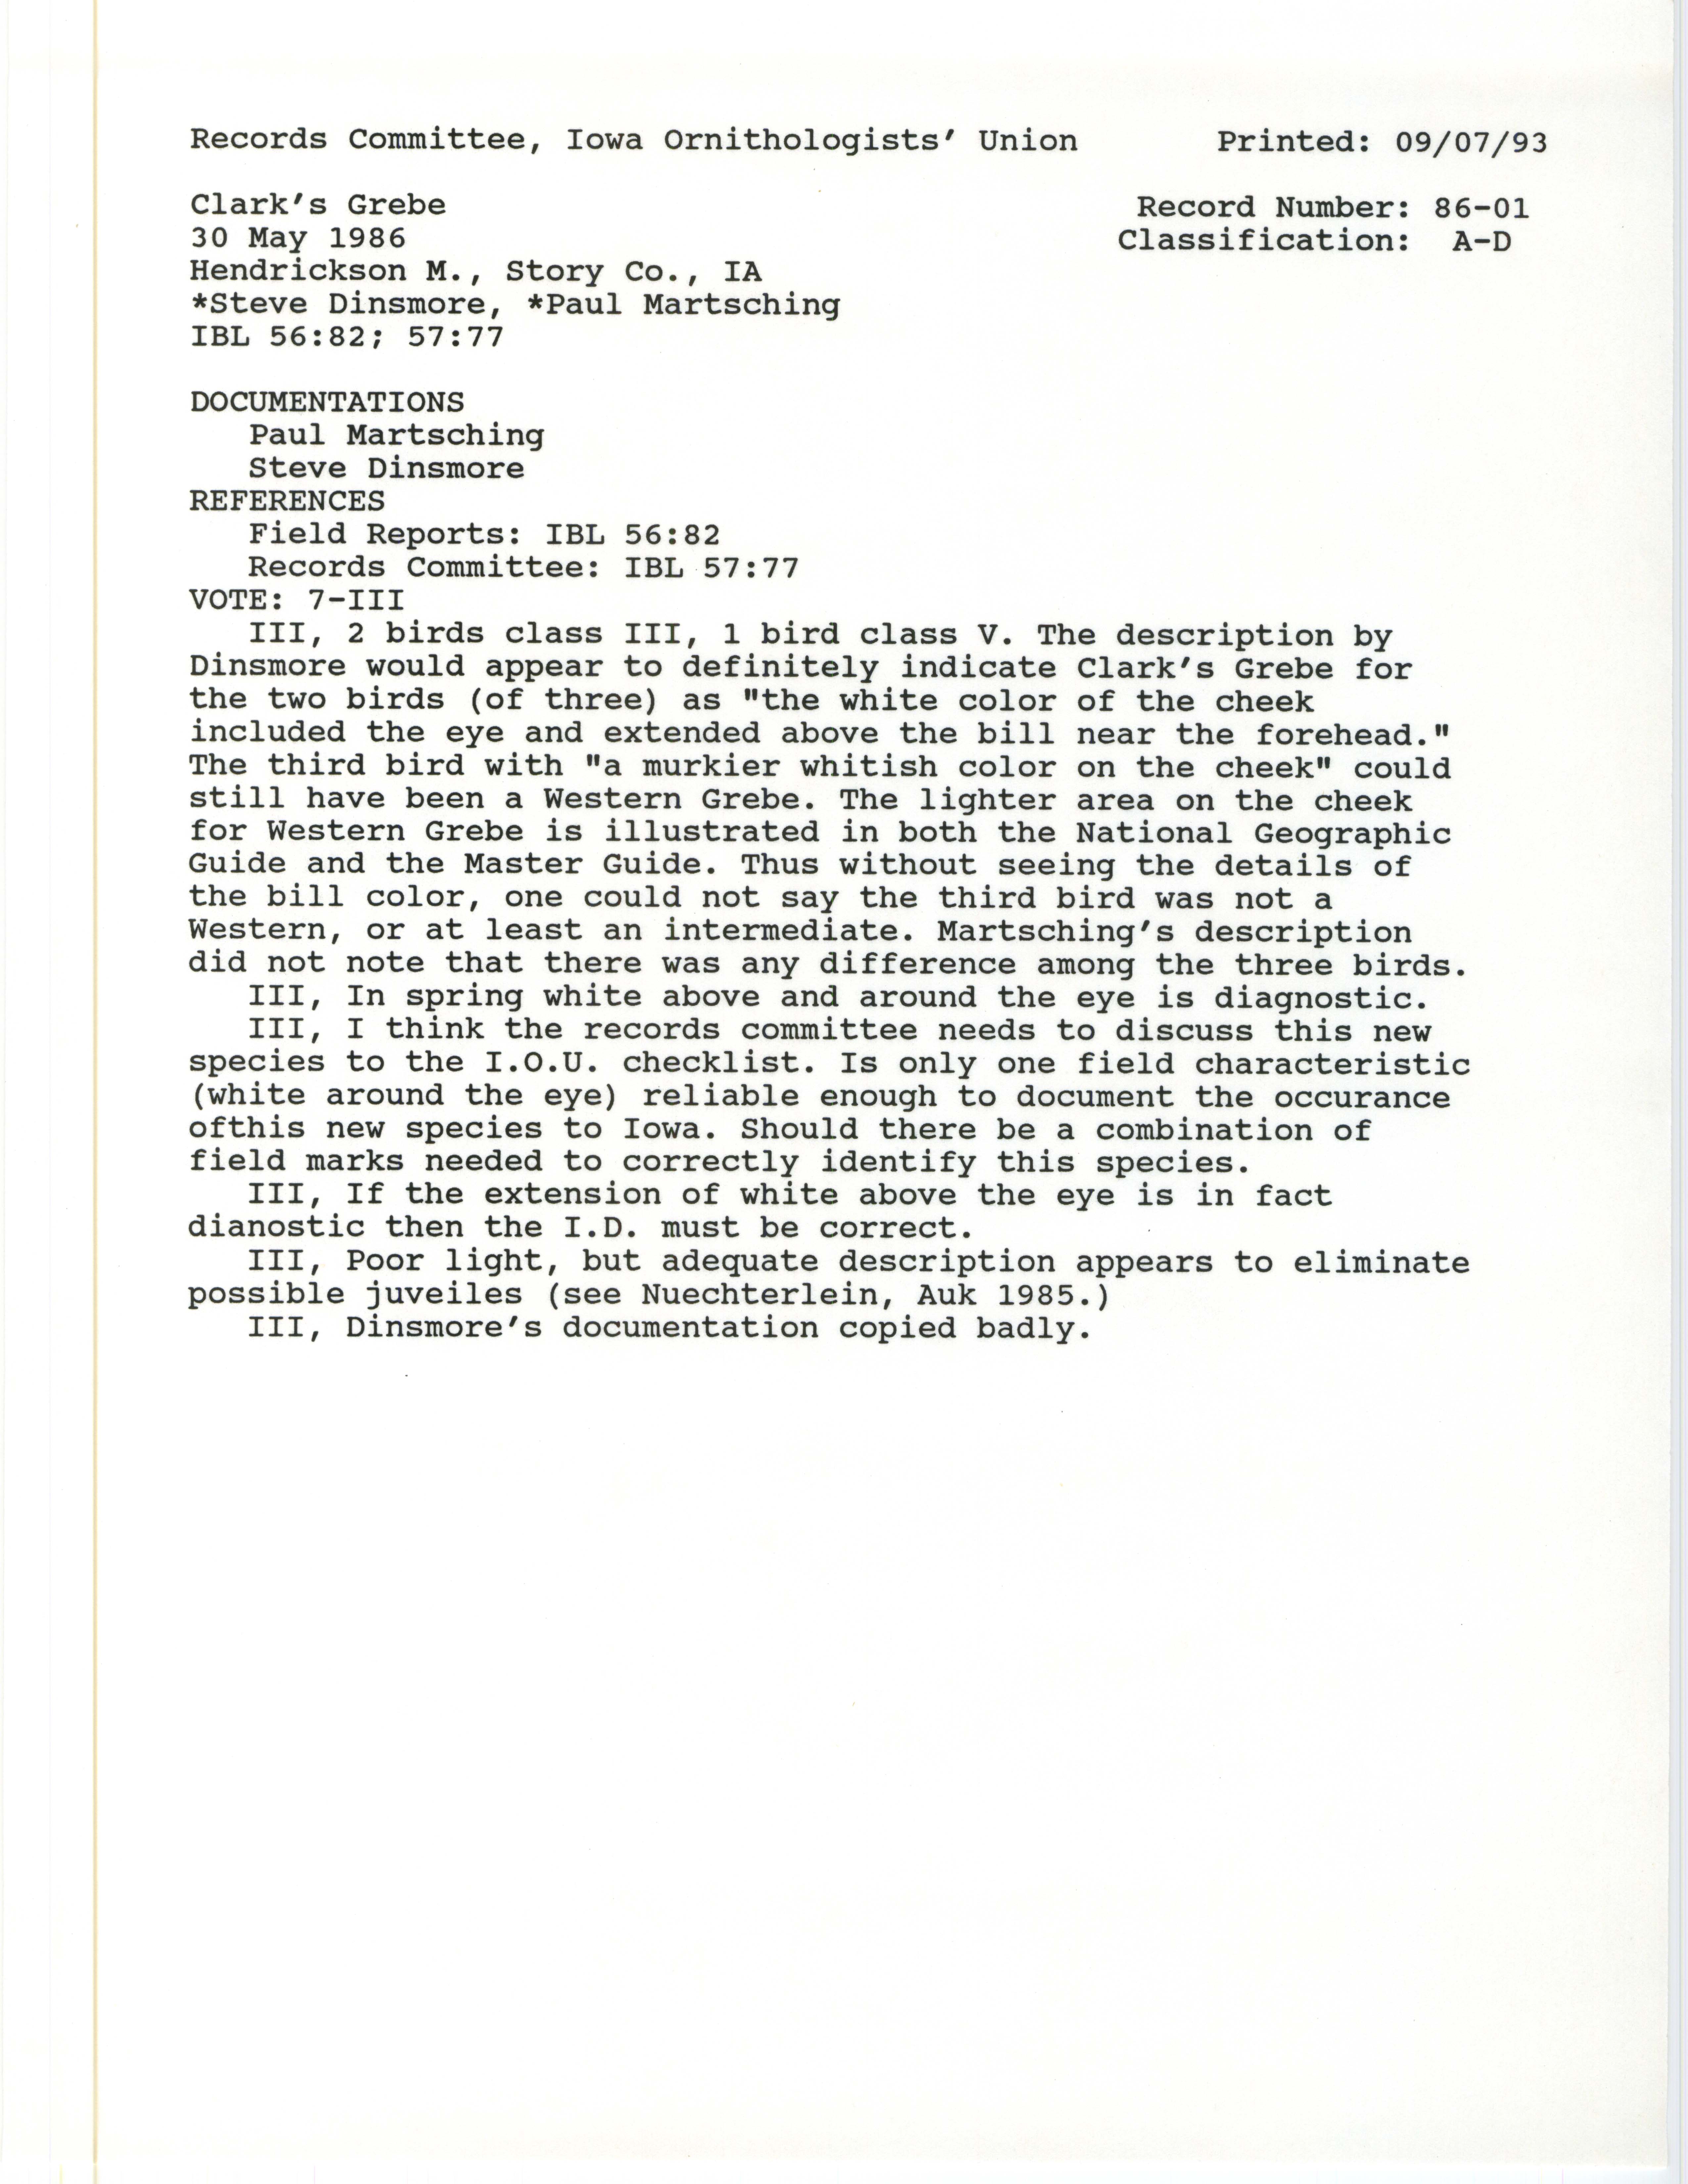 Records Committee review for rare bird sighting of Clark's Grebe at Hendrickson Marsh, 1986